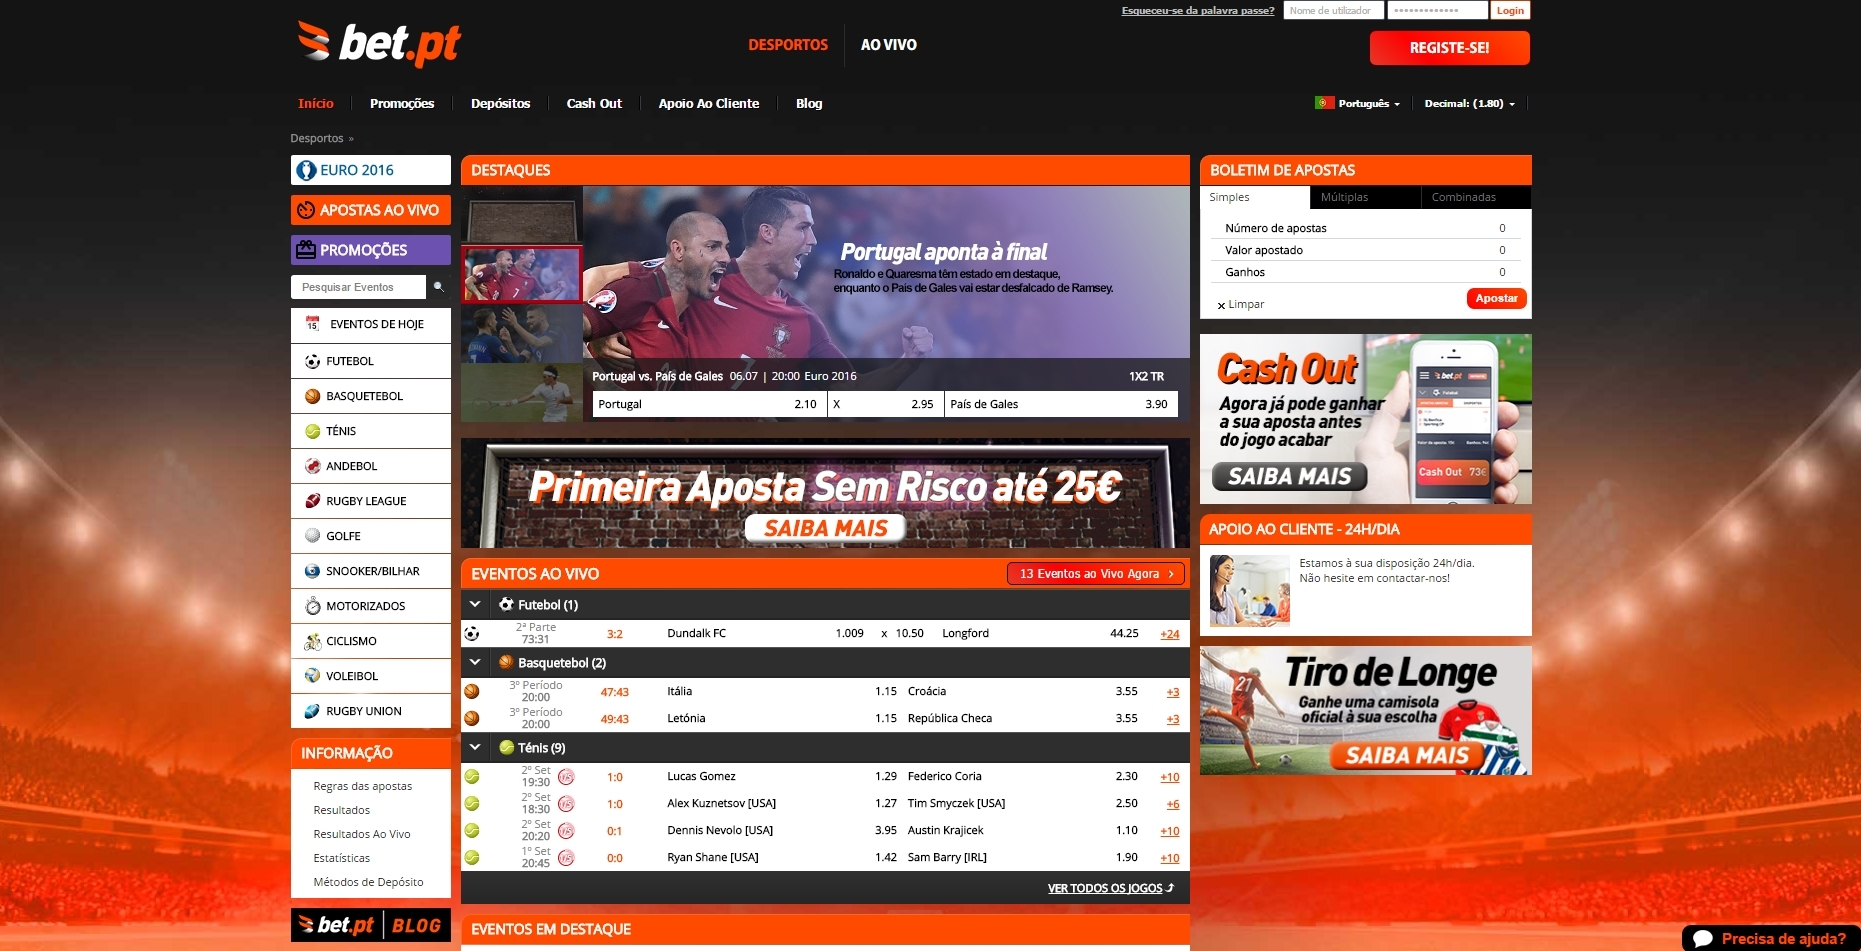 Бета развлечения. Pragmatic Play software provider. Sportingbet366: apostas app Portugal.